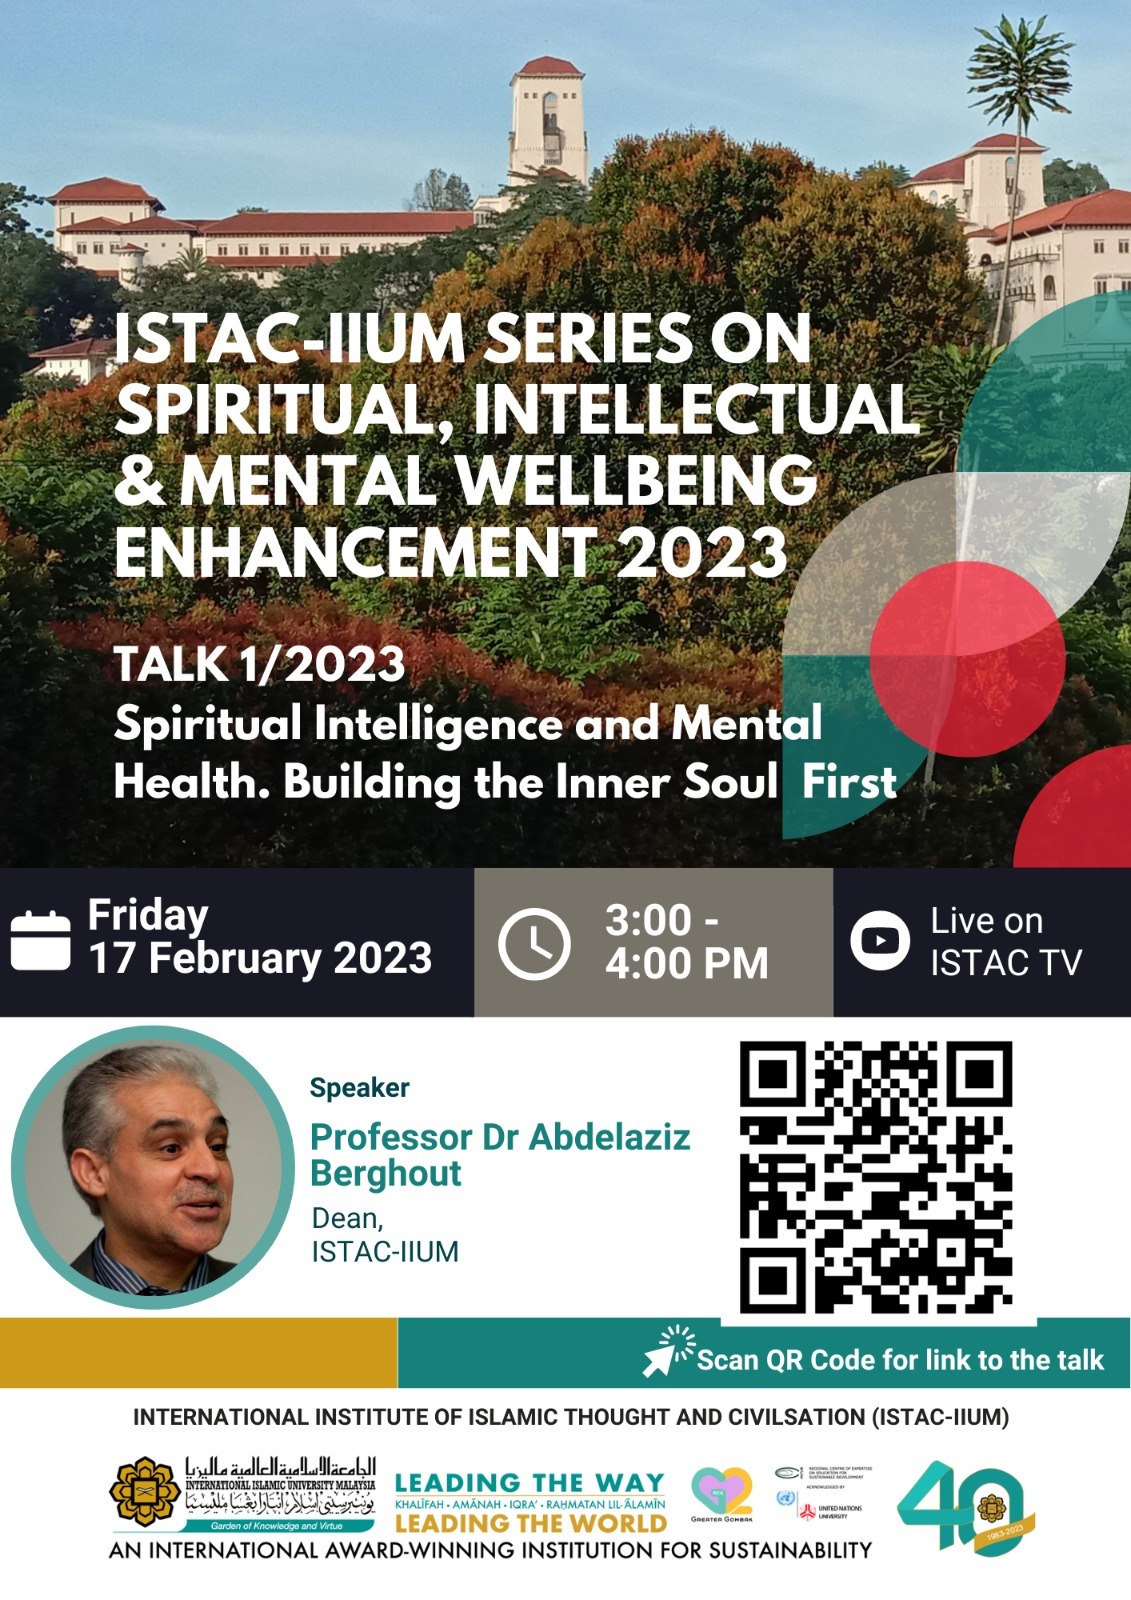 ISTAC-IIUM SERIES ON SPIRITUAL, INTELLECTUAL & MENTAL WELLBEING ENHANCEMENT 2023 - TALK 1/2023